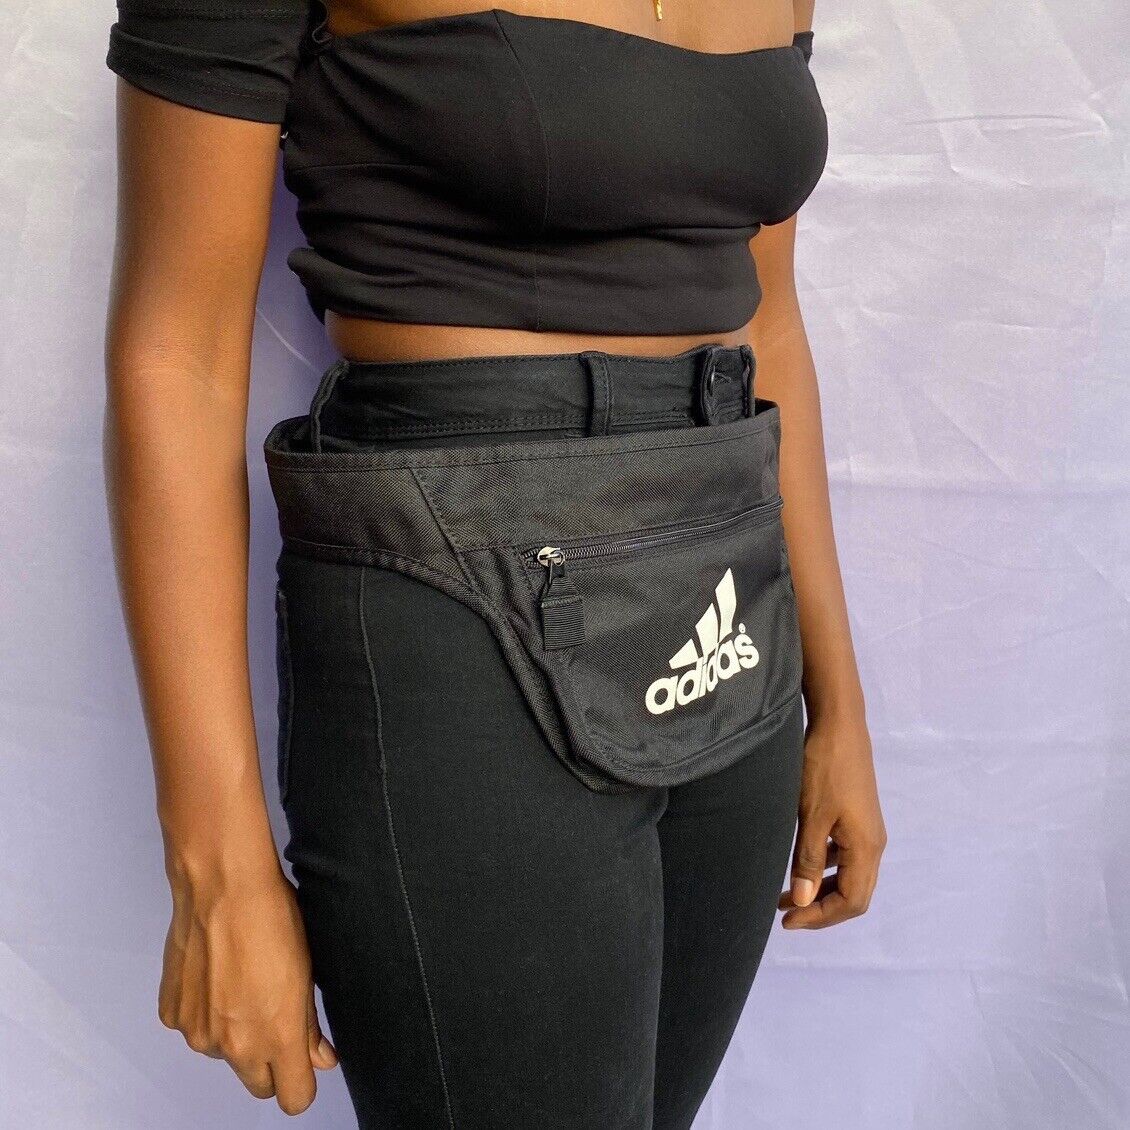 Vintage black Adidas Fanny pack - waist pack - image 3